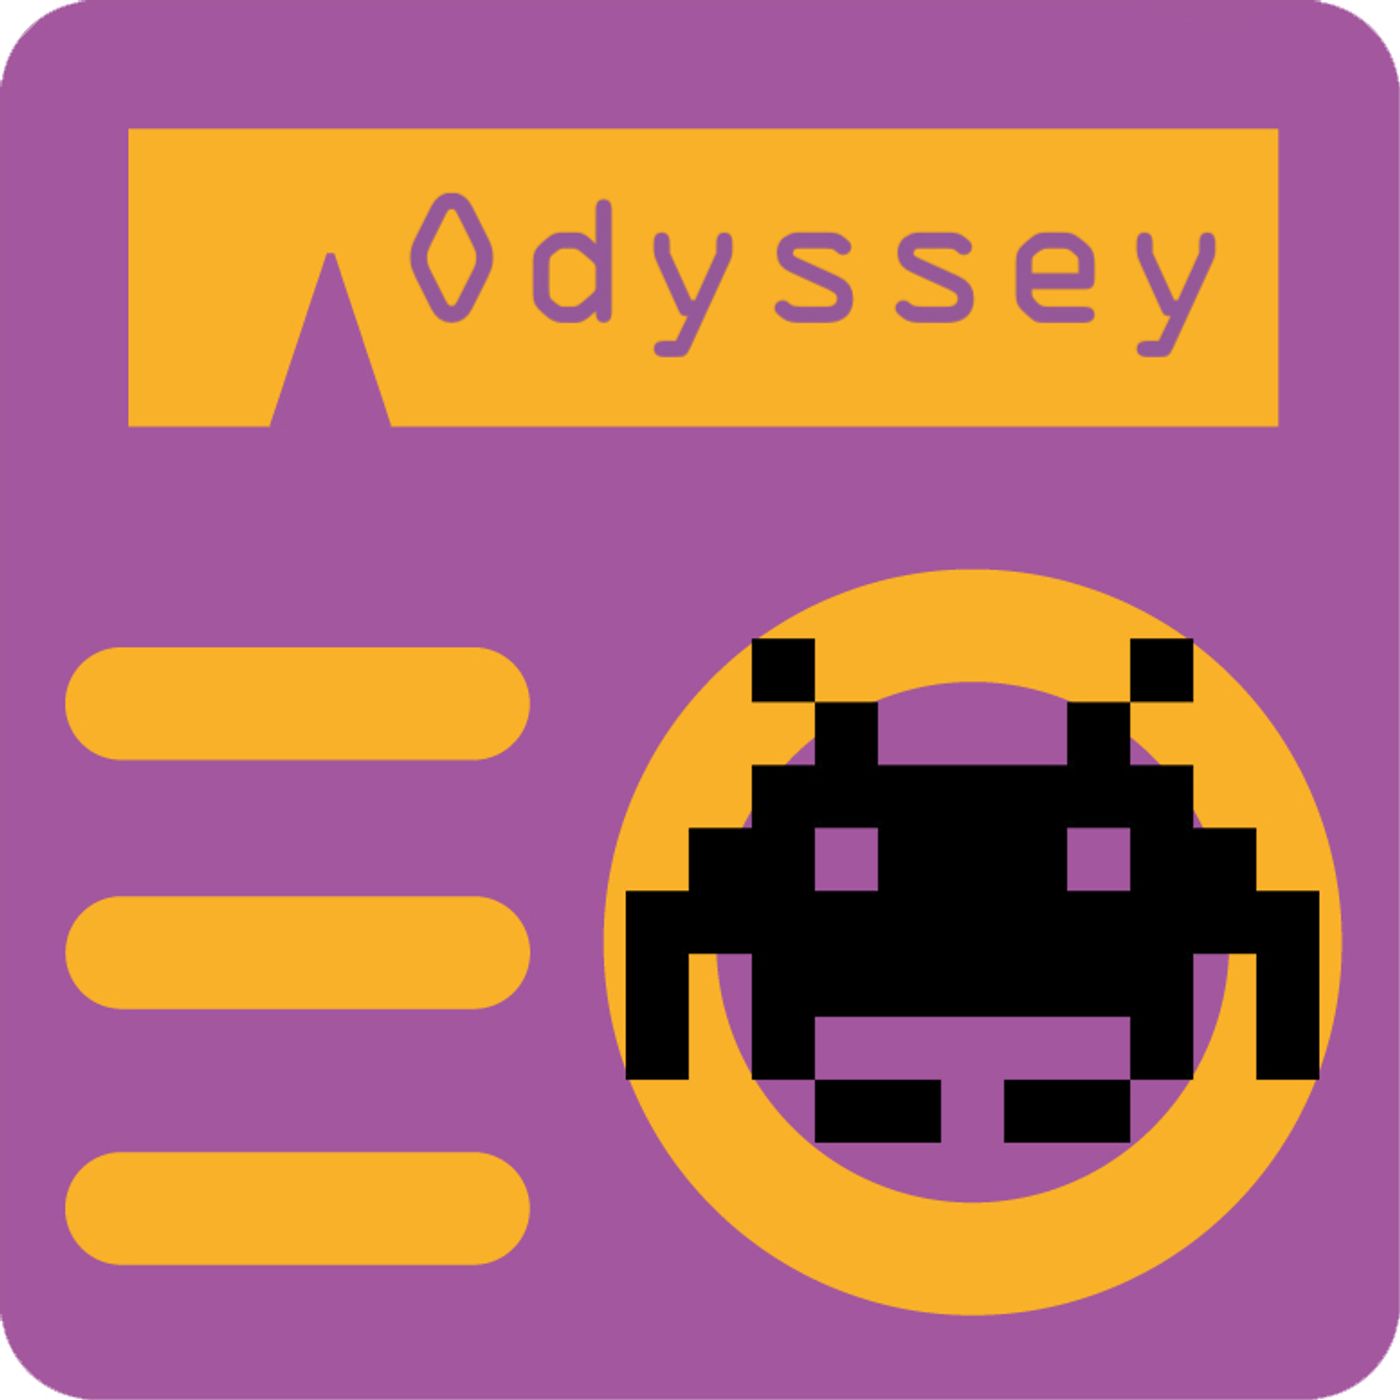 Odyssey 00 - La semana del año